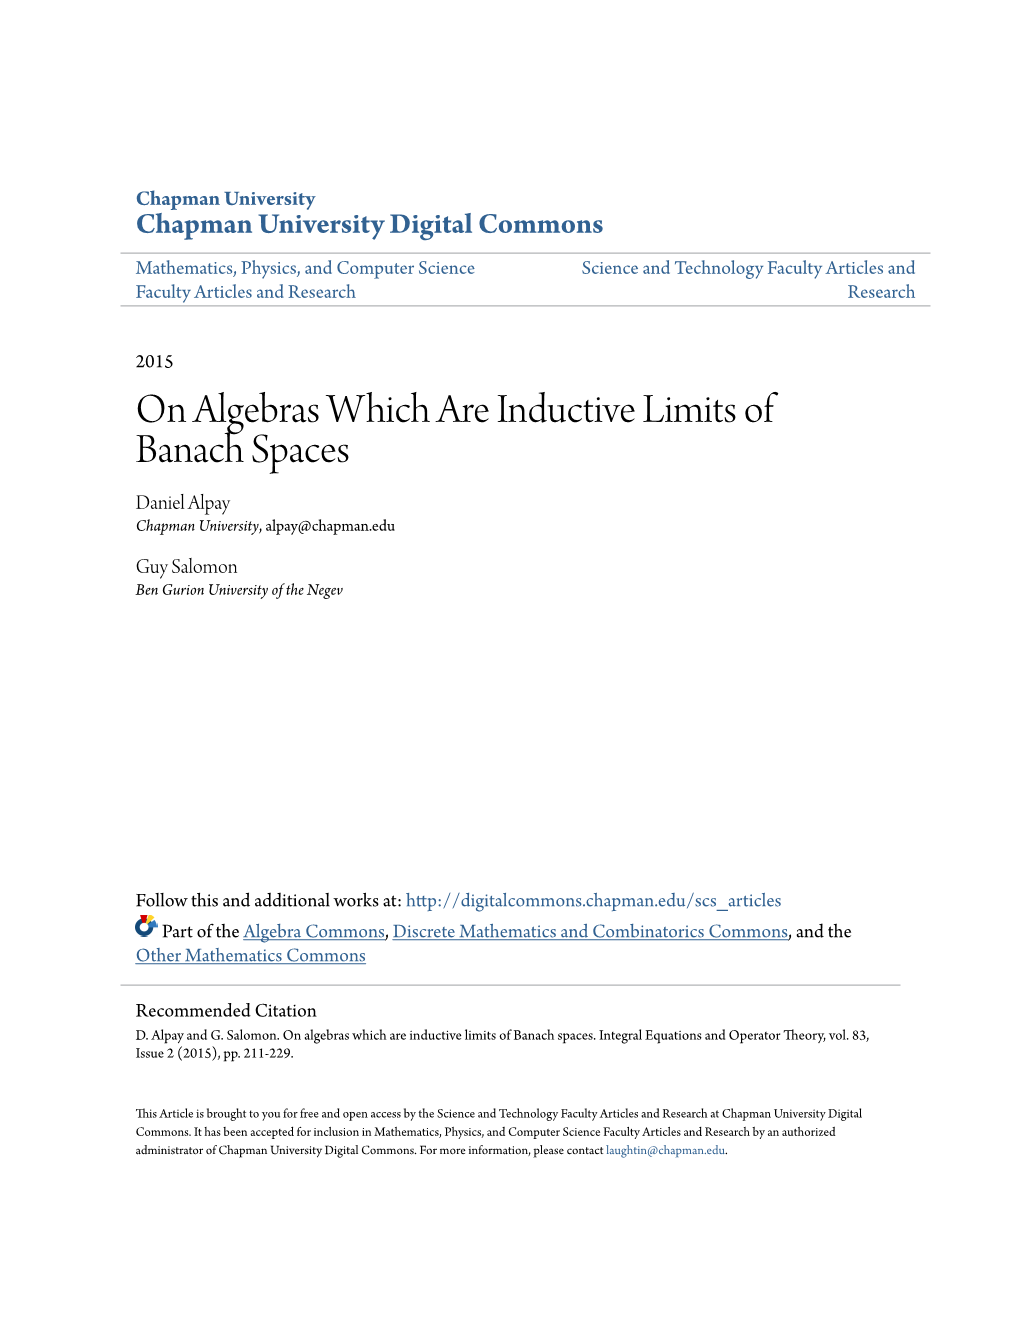 On Algebras Which Are Inductive Limits of Banach Spaces Daniel Alpay Chapman University, Alpay@Chapman.Edu